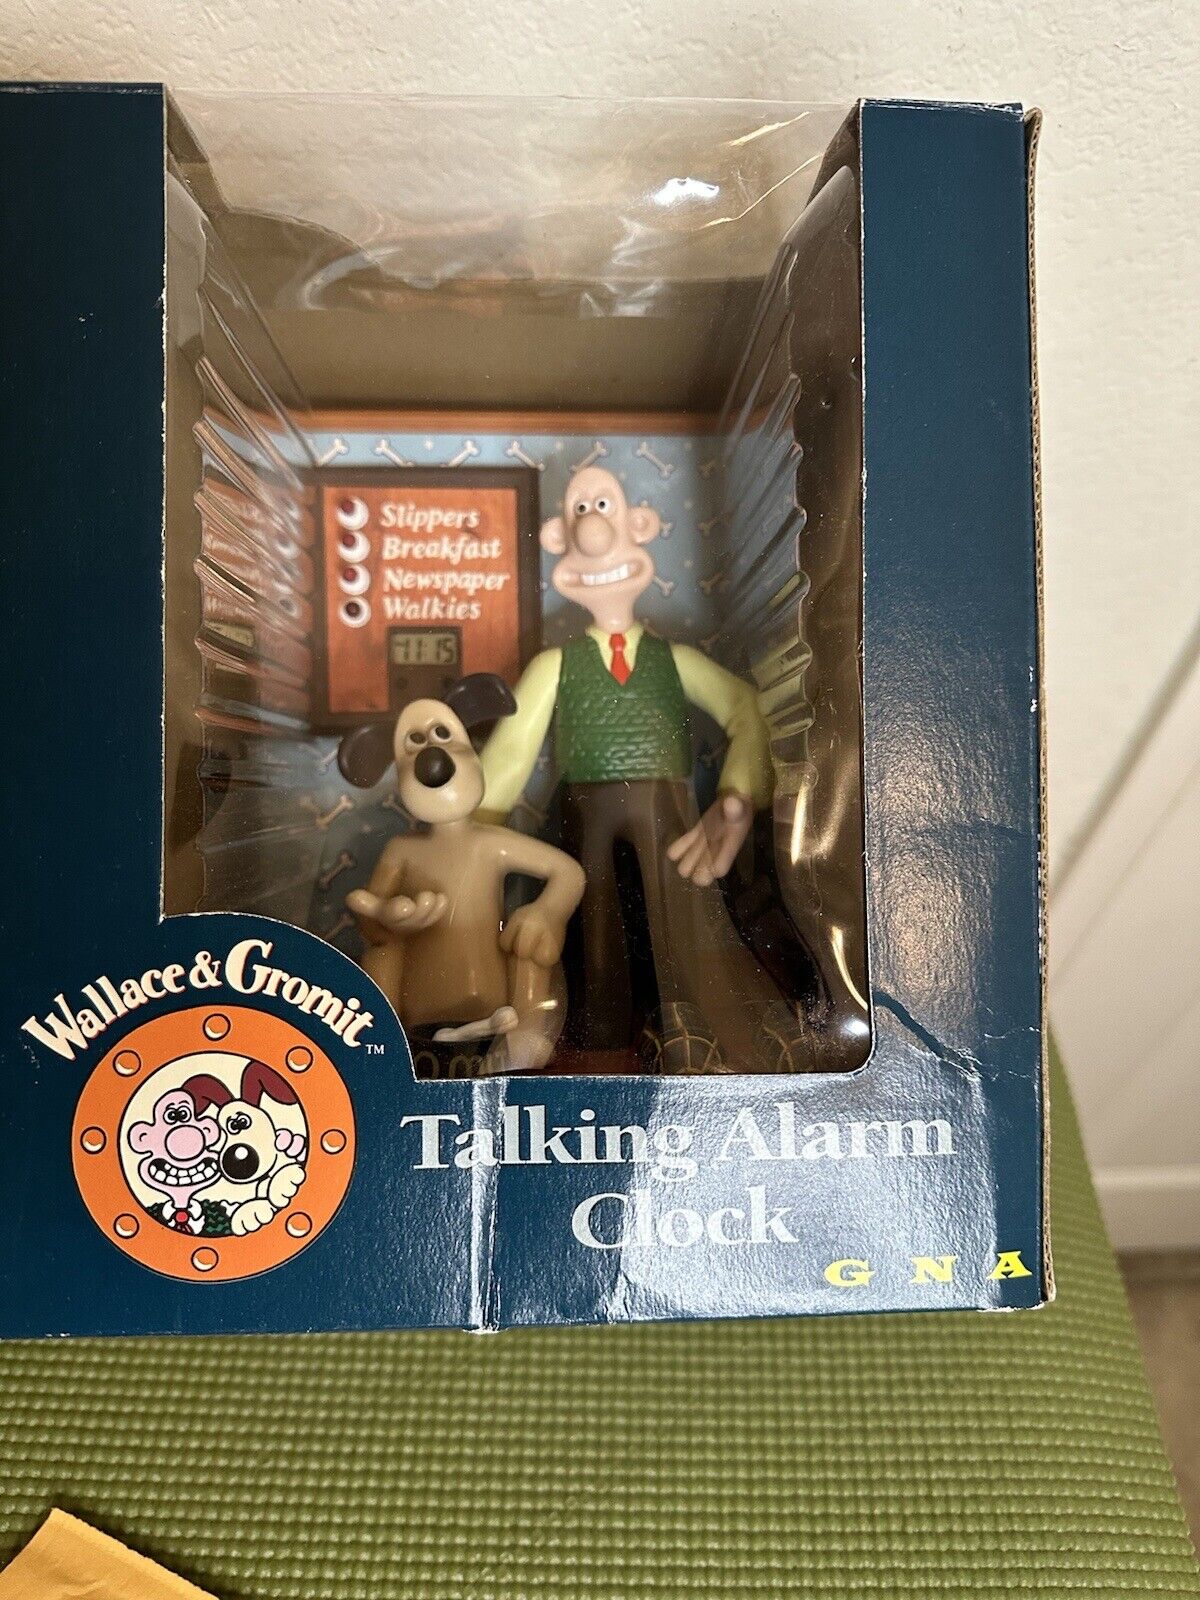 Wallace & Gromit Talking Alarm Clock Vintage Wesco 1995 Brand New Unused - Boxed